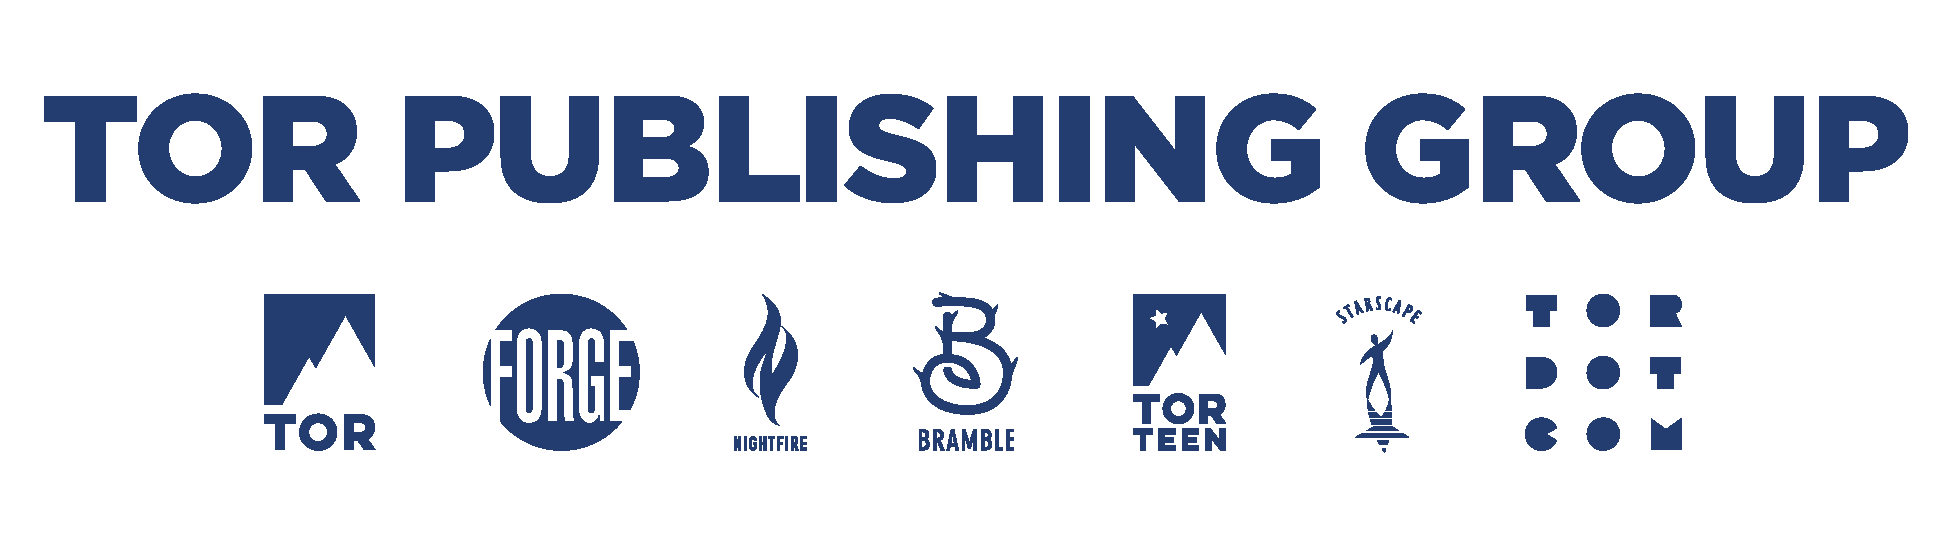 Tor Publishing Group logo with Forge, Nightfire, Bramble, Tor Teen, Starscape, and Tordotcom Publishing imprints